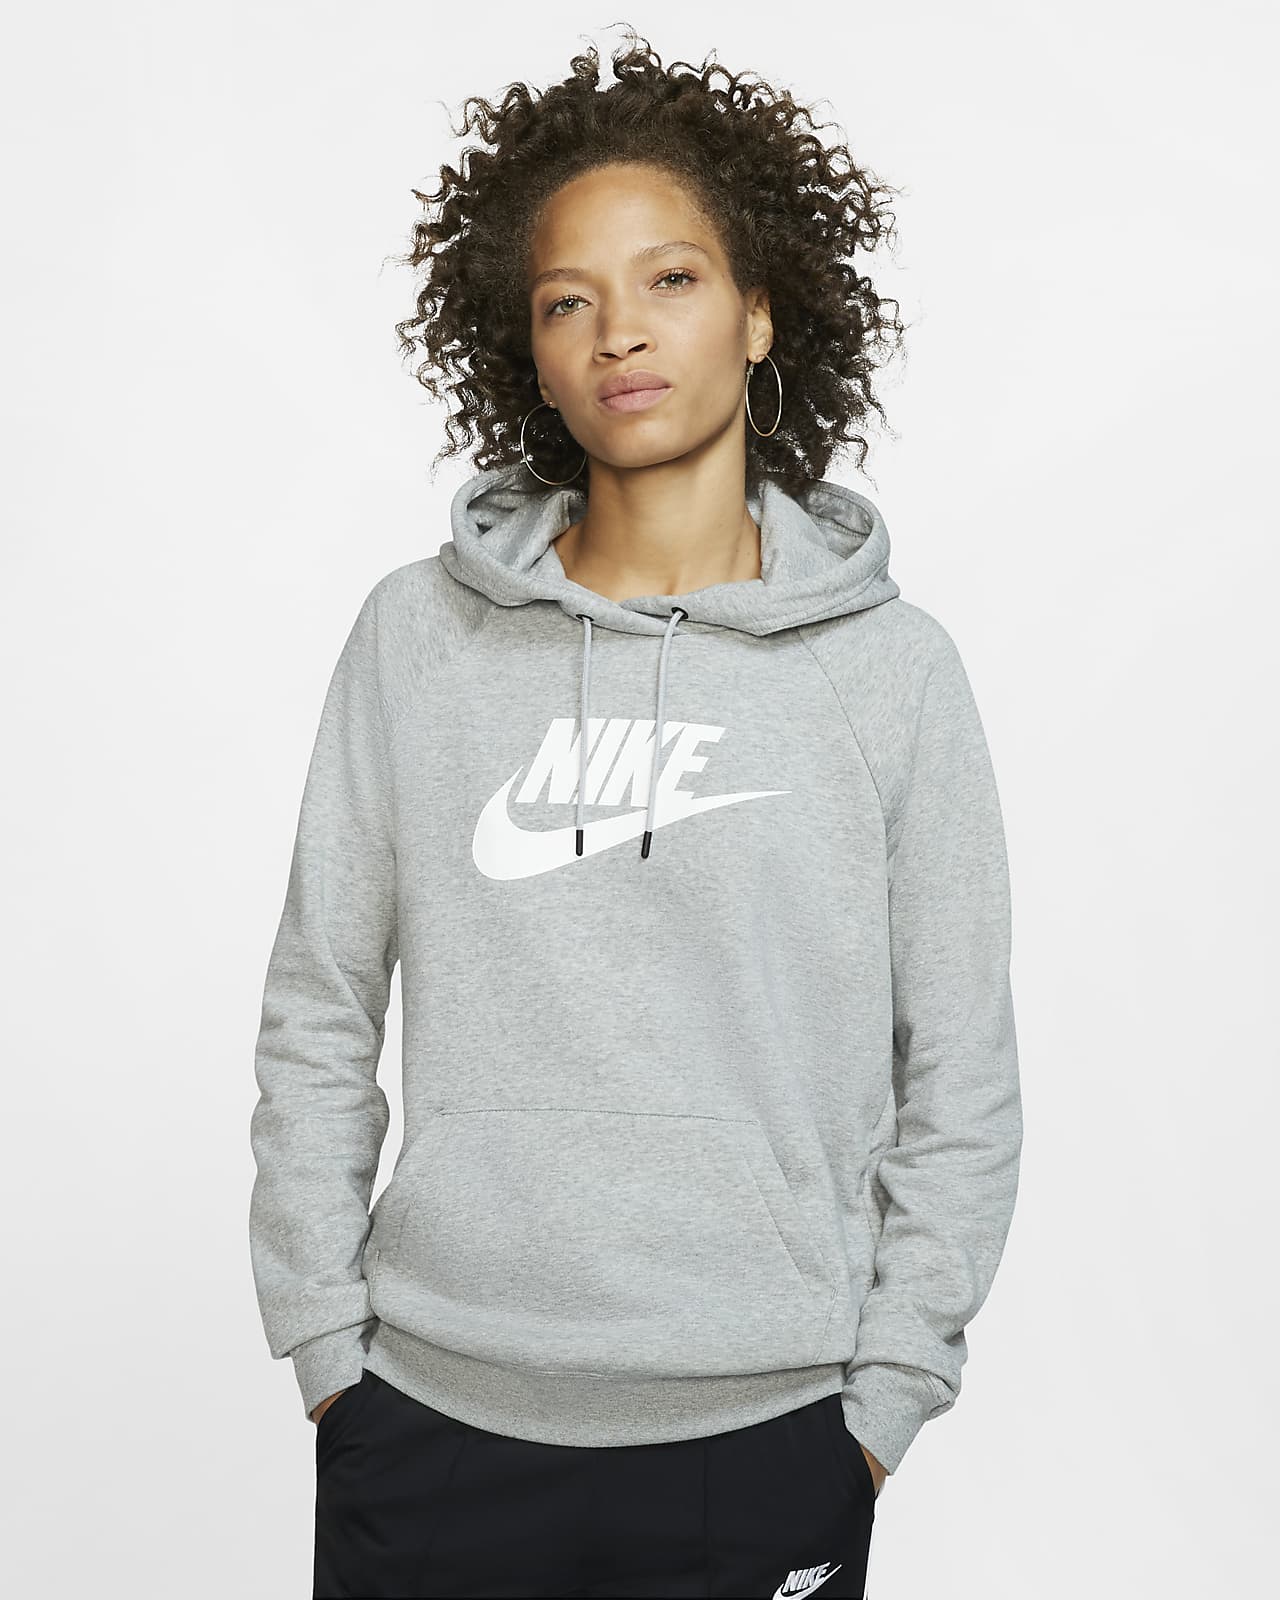 Ambassade Intervenere Uplifted Nike Sportswear Essential Hoodie Women's on Sale, SAVE 36% - mpgc.net